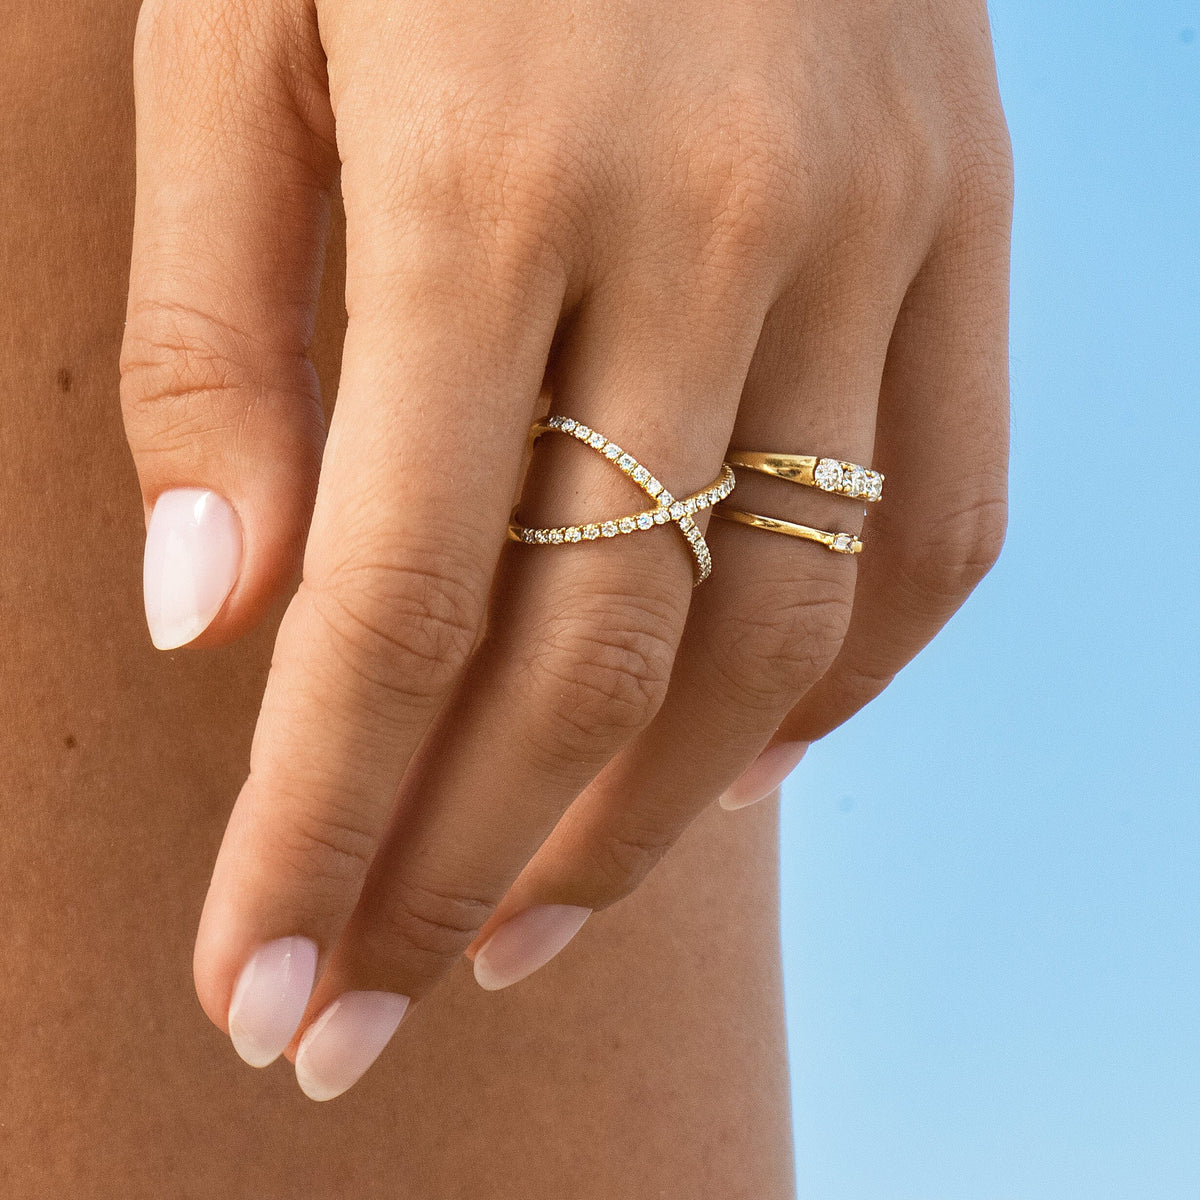 Adorned Hands Brilliant Cut White Diamond Heart Ring in 18K Gold & Platinum